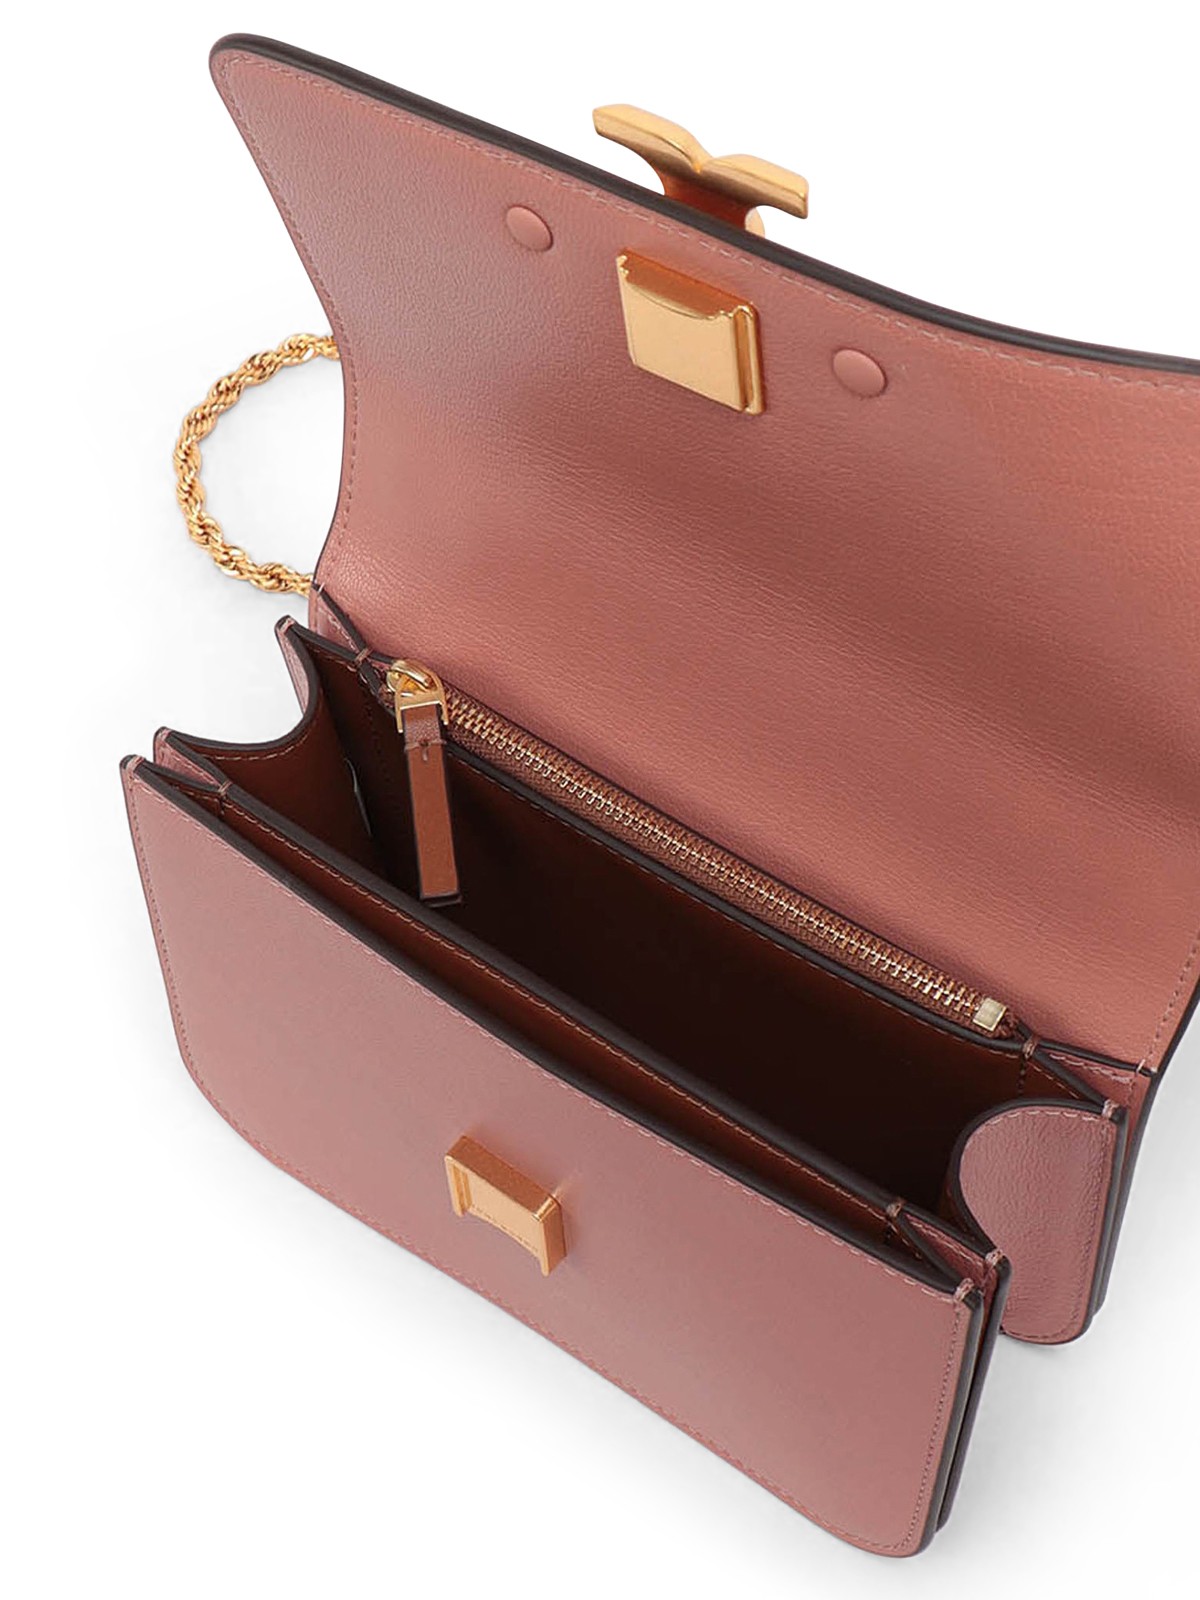 Eleanor Small Bag : Women's Handbags, Shoulder Bags